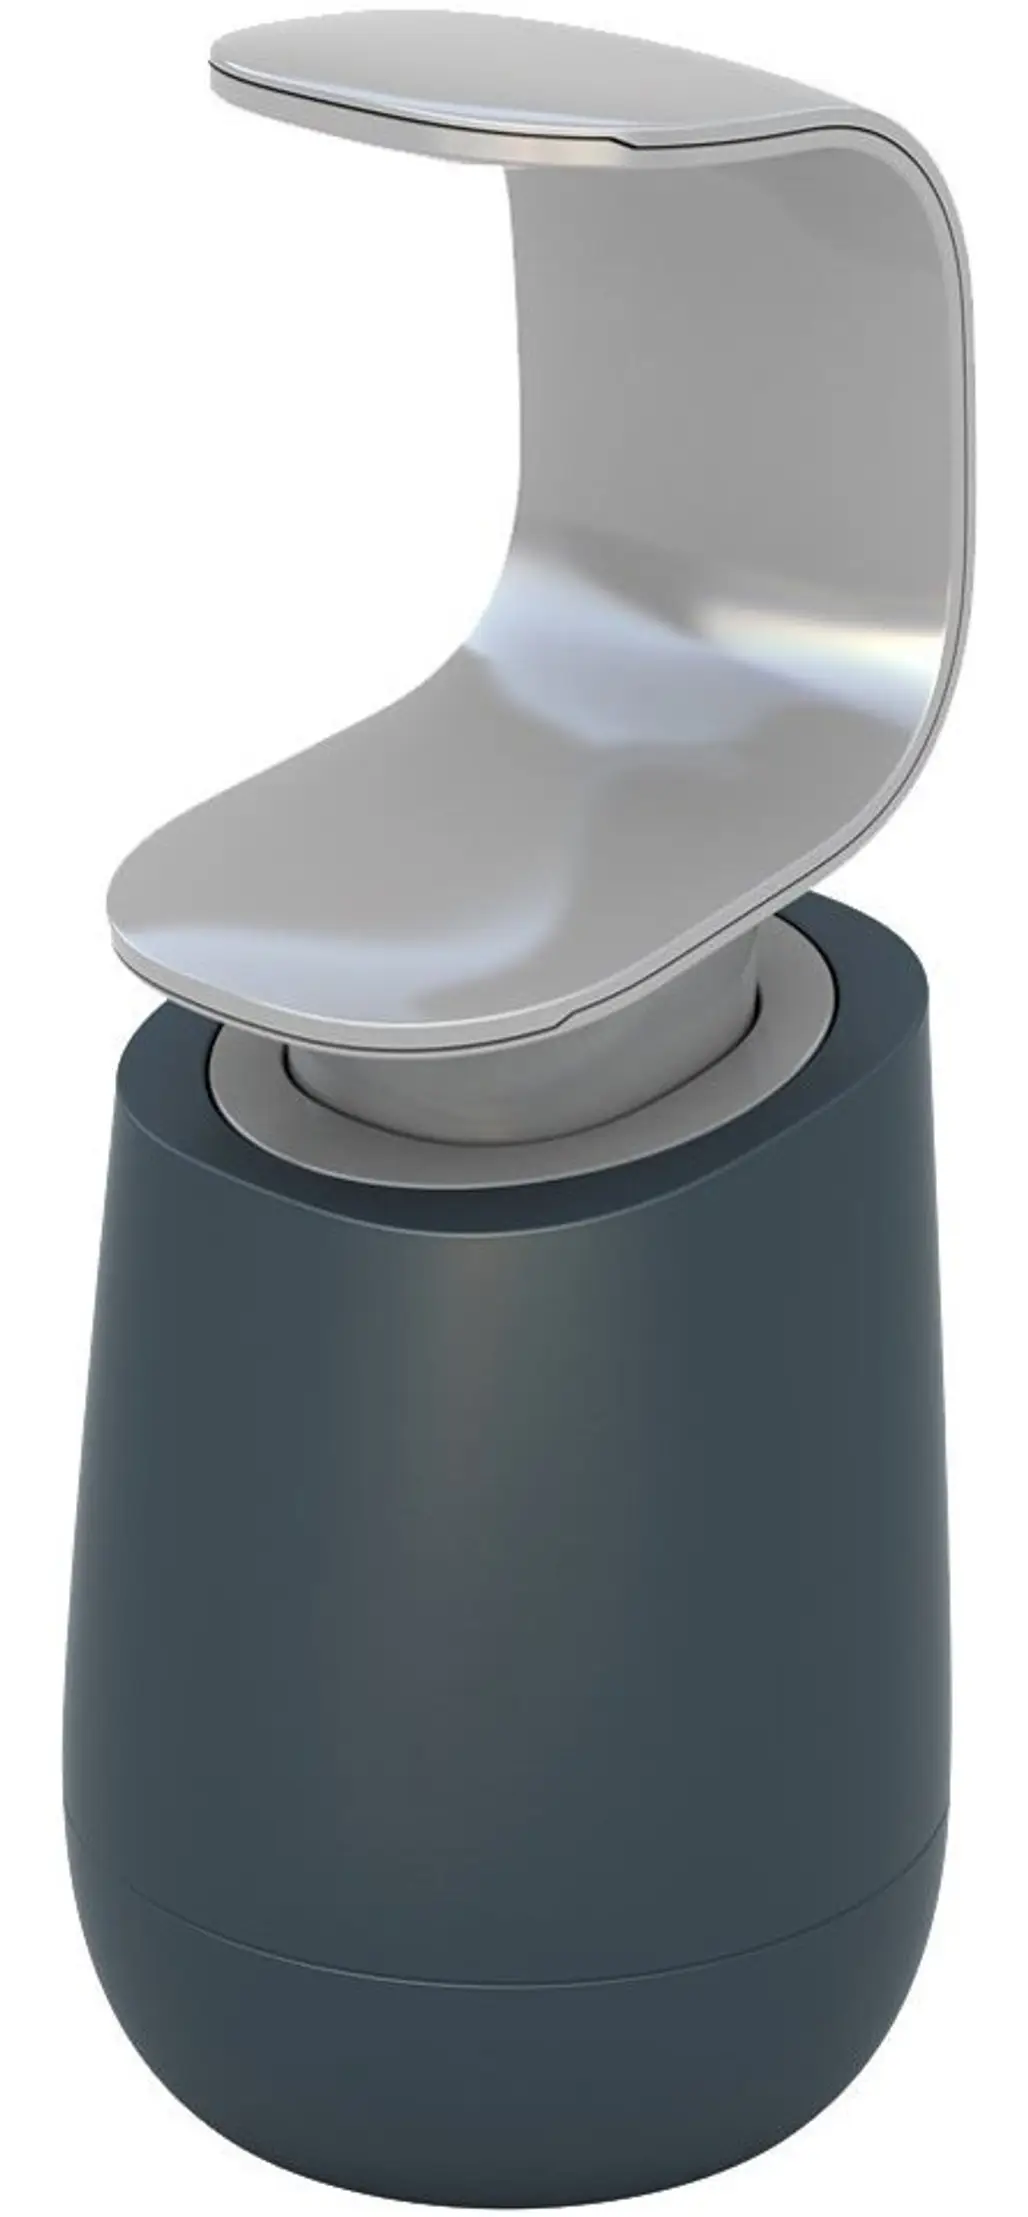 Joseph Joseph C-Pump Single-Handed Soap Dispenser, Grey